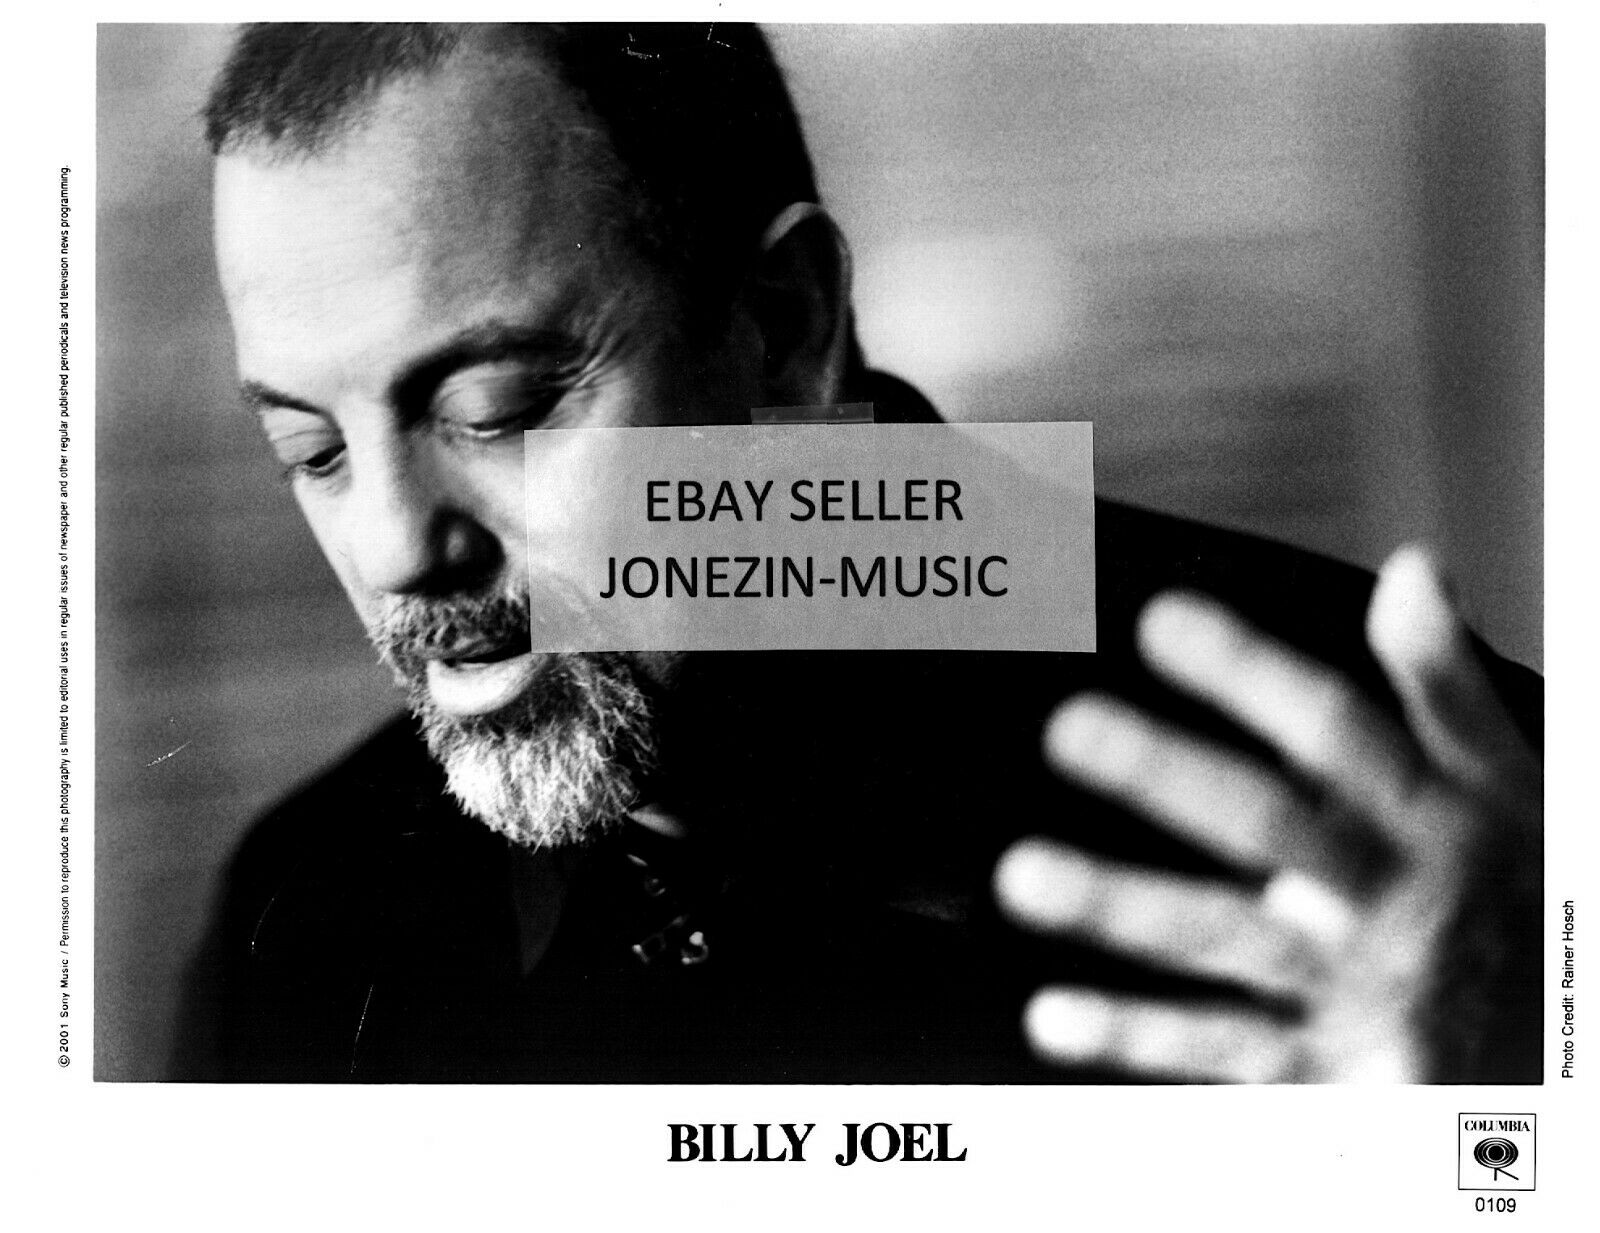 Billy Joel 8x10 Inch Black & White Promo/publicity/press Photo 2001 Vg+